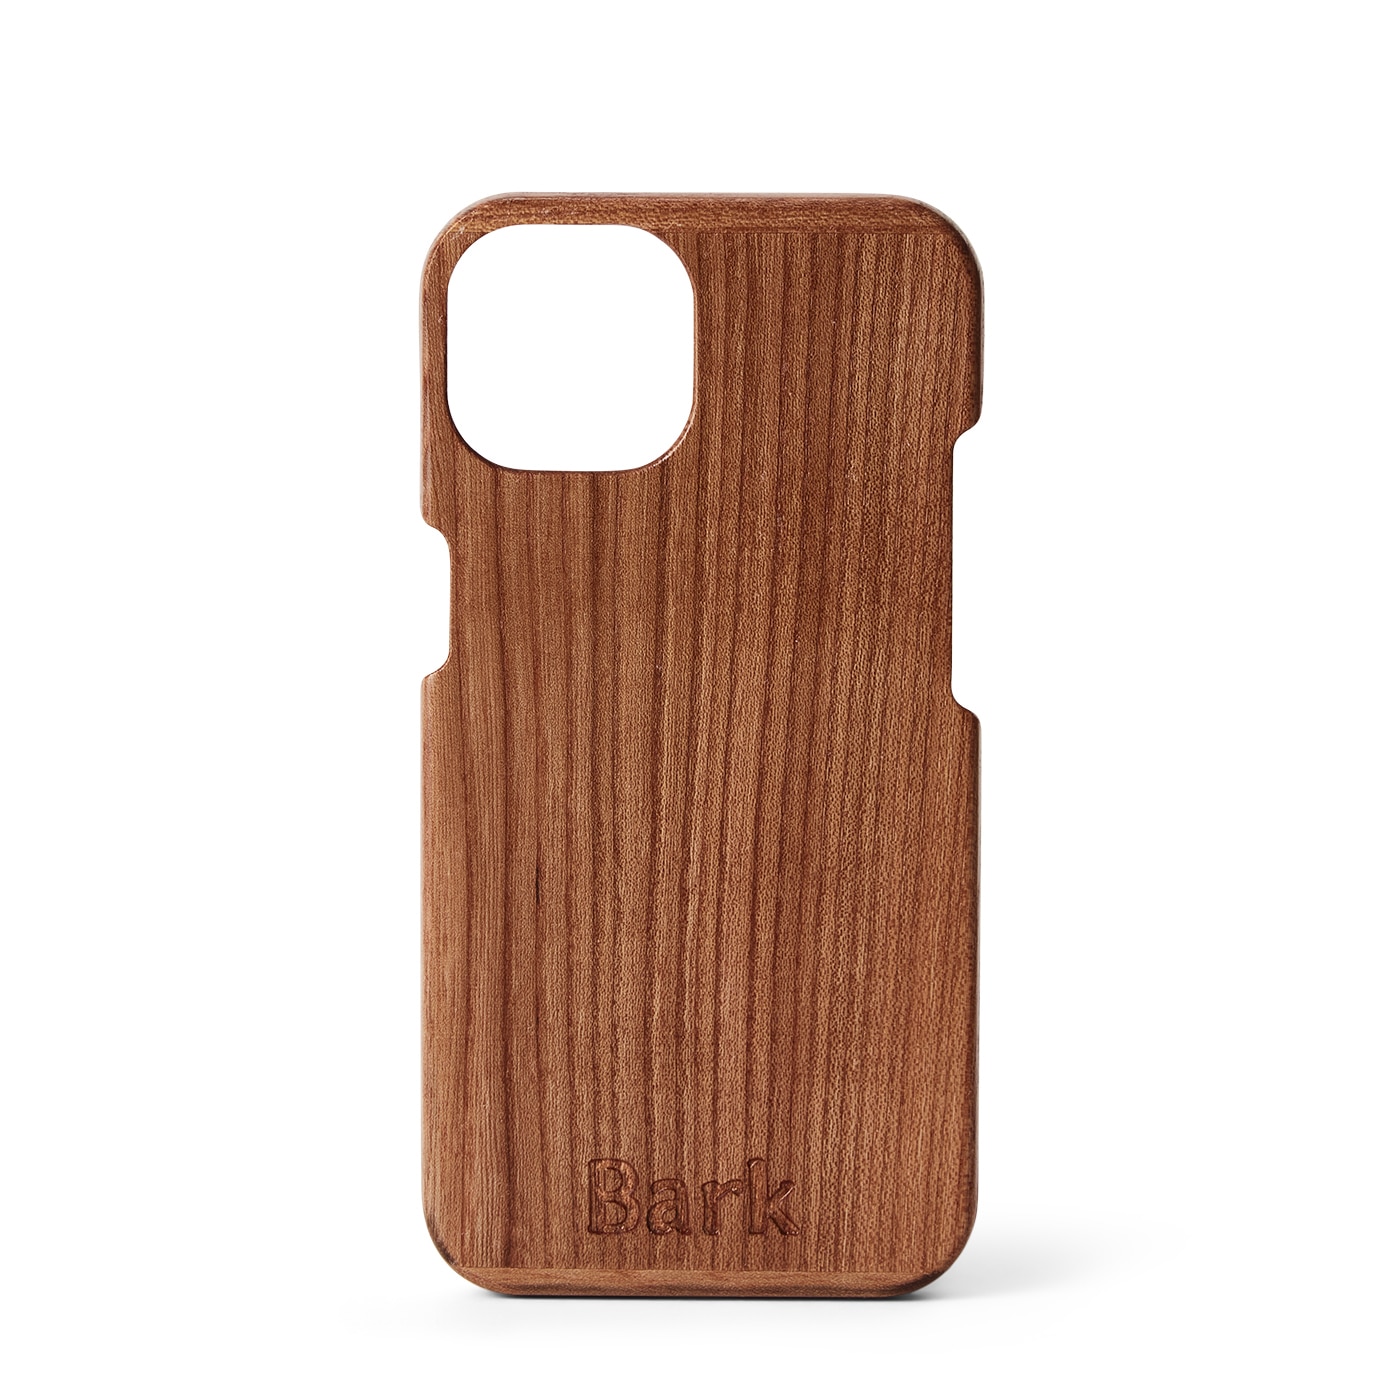 iPhone 13 custodia in legno di latifoglia svedese - Alm